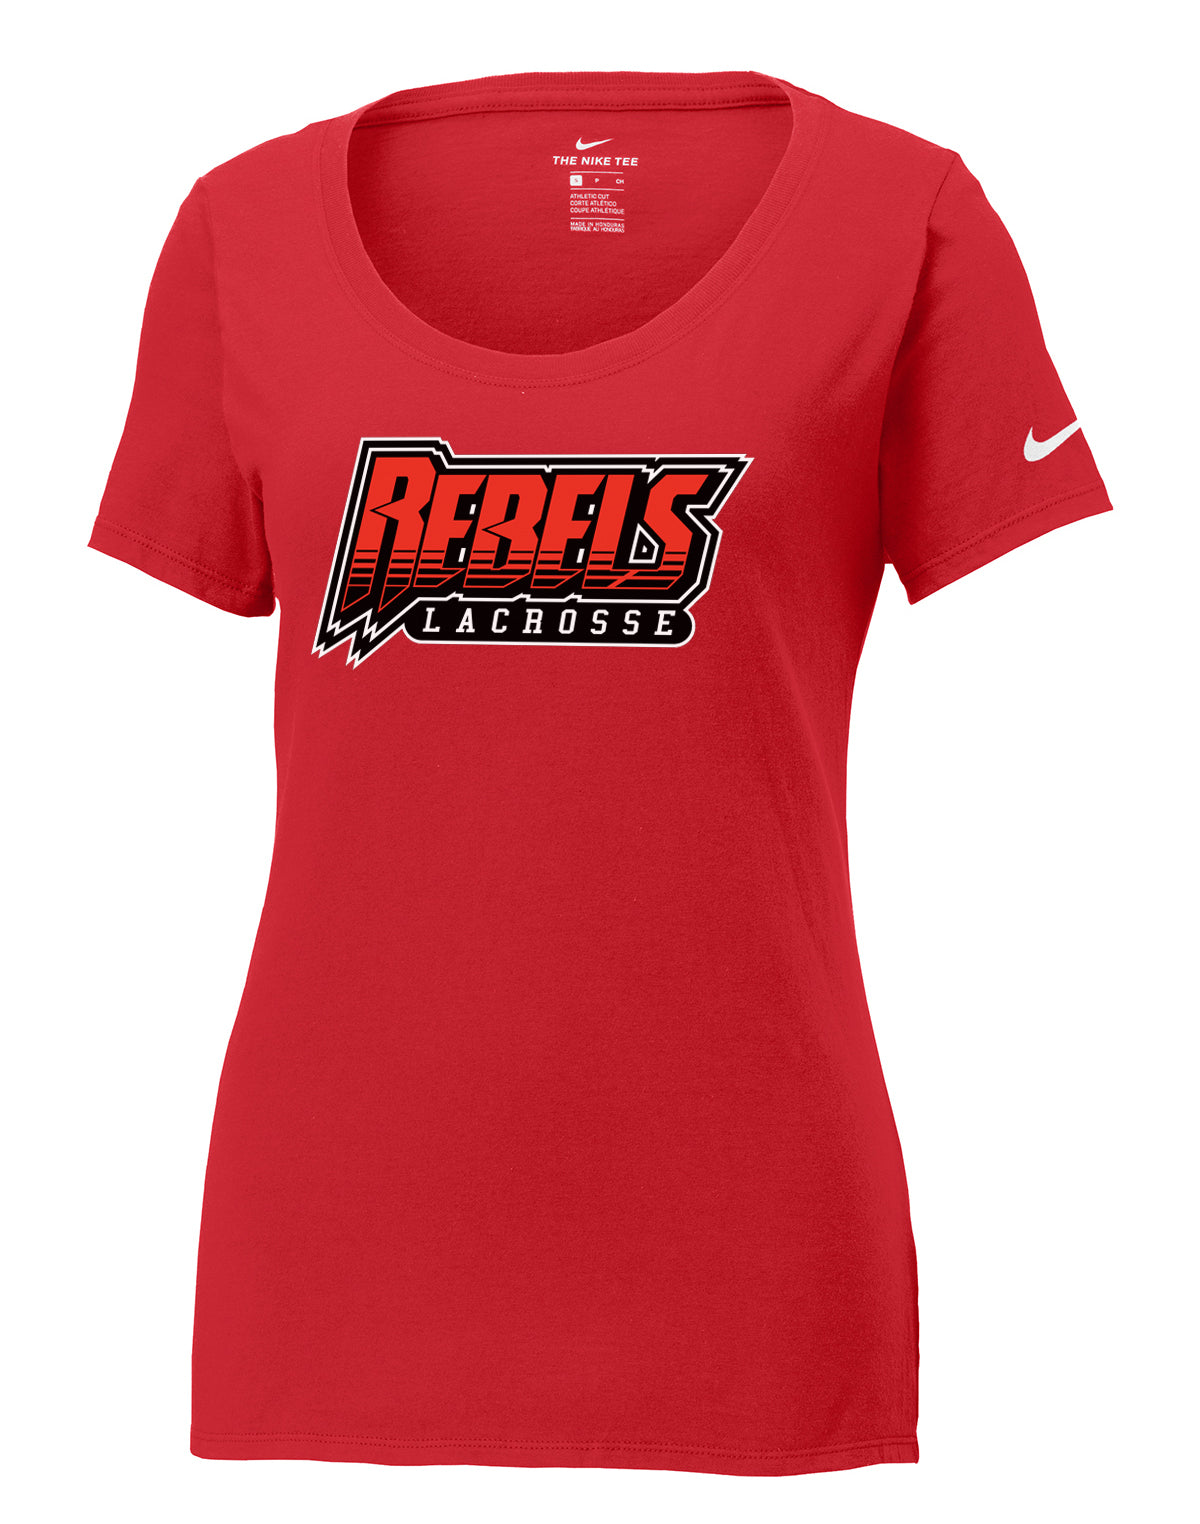 Rebels Lacrosse Nike Women's Gym Red Core Cotton Tee